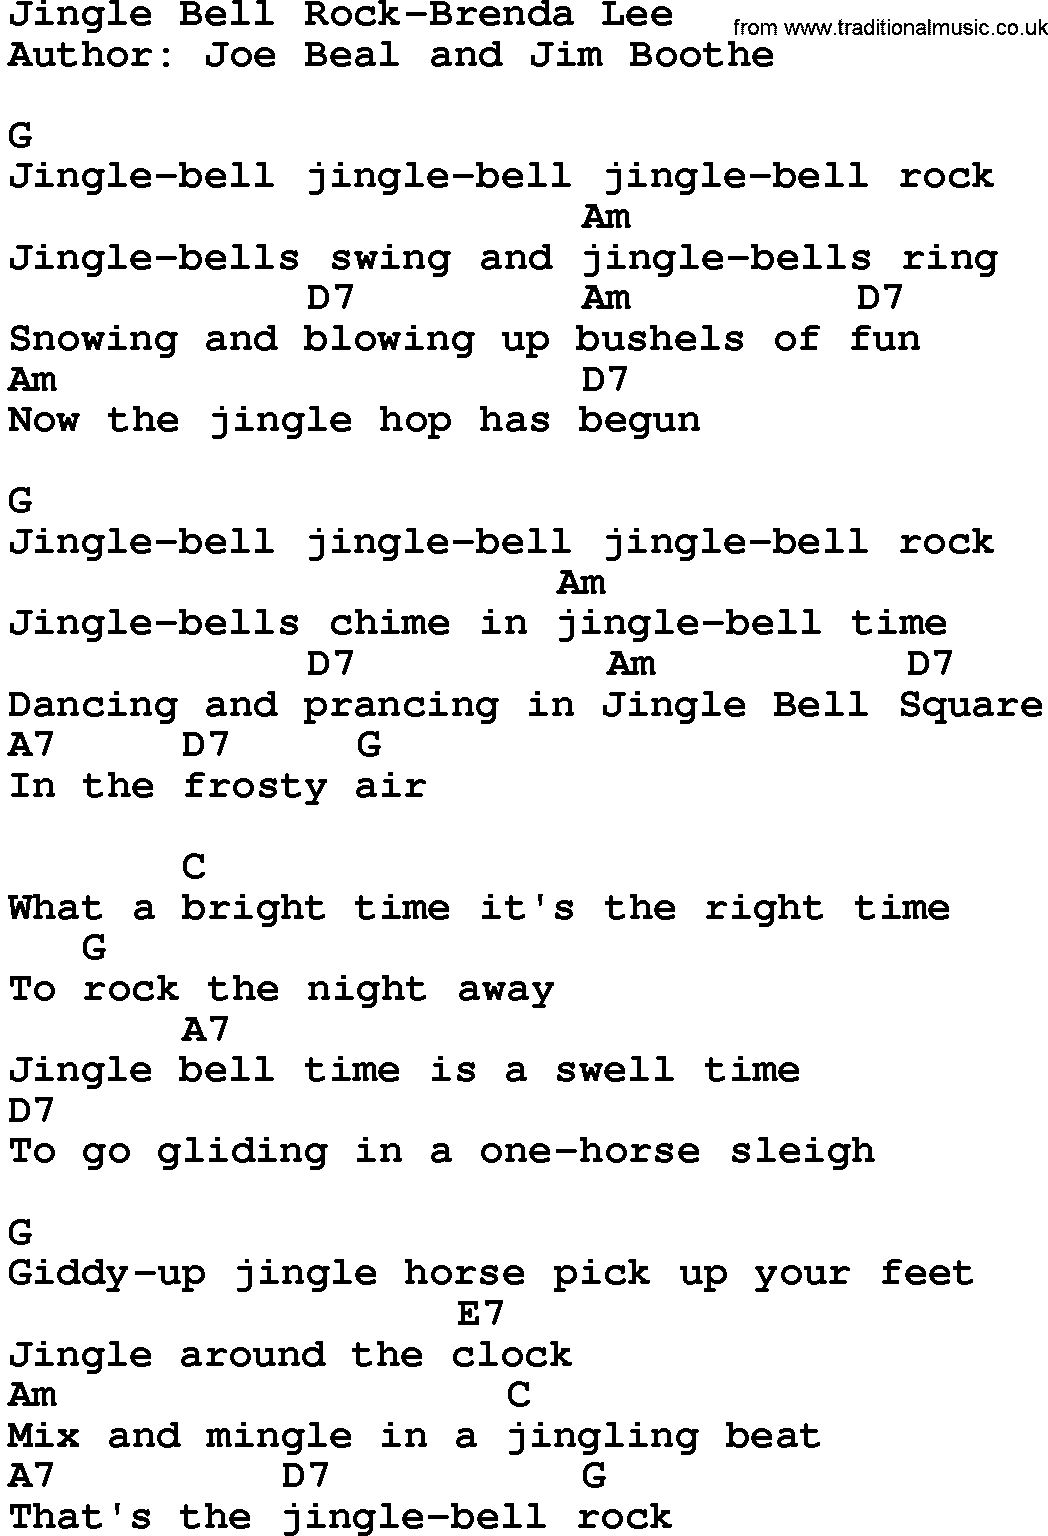 Jingle Bells Chords Country Musicjingle Bell Rock Brenda Lee Lyrics And Chords